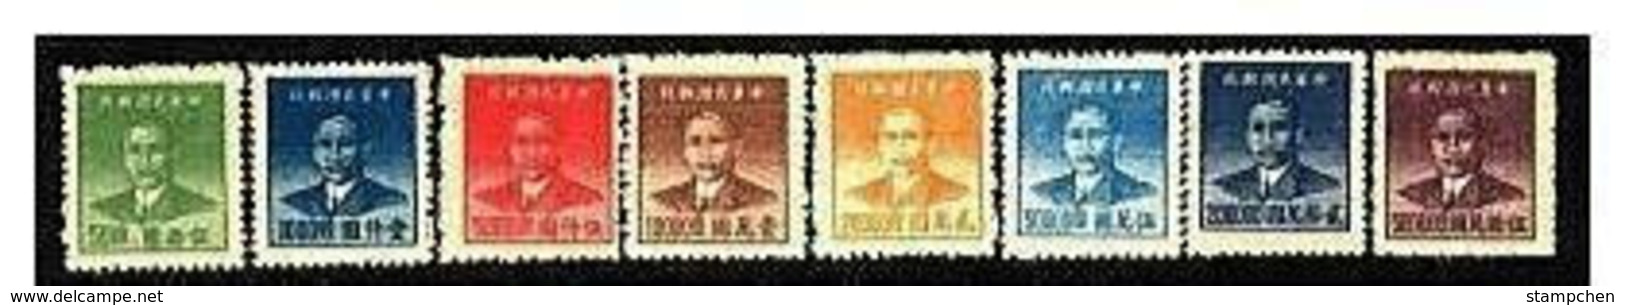 Rep China 1949 Sun Yat-sen Gold Yuan Hwa Nan Print Stamps D62 SYS - Nuevos